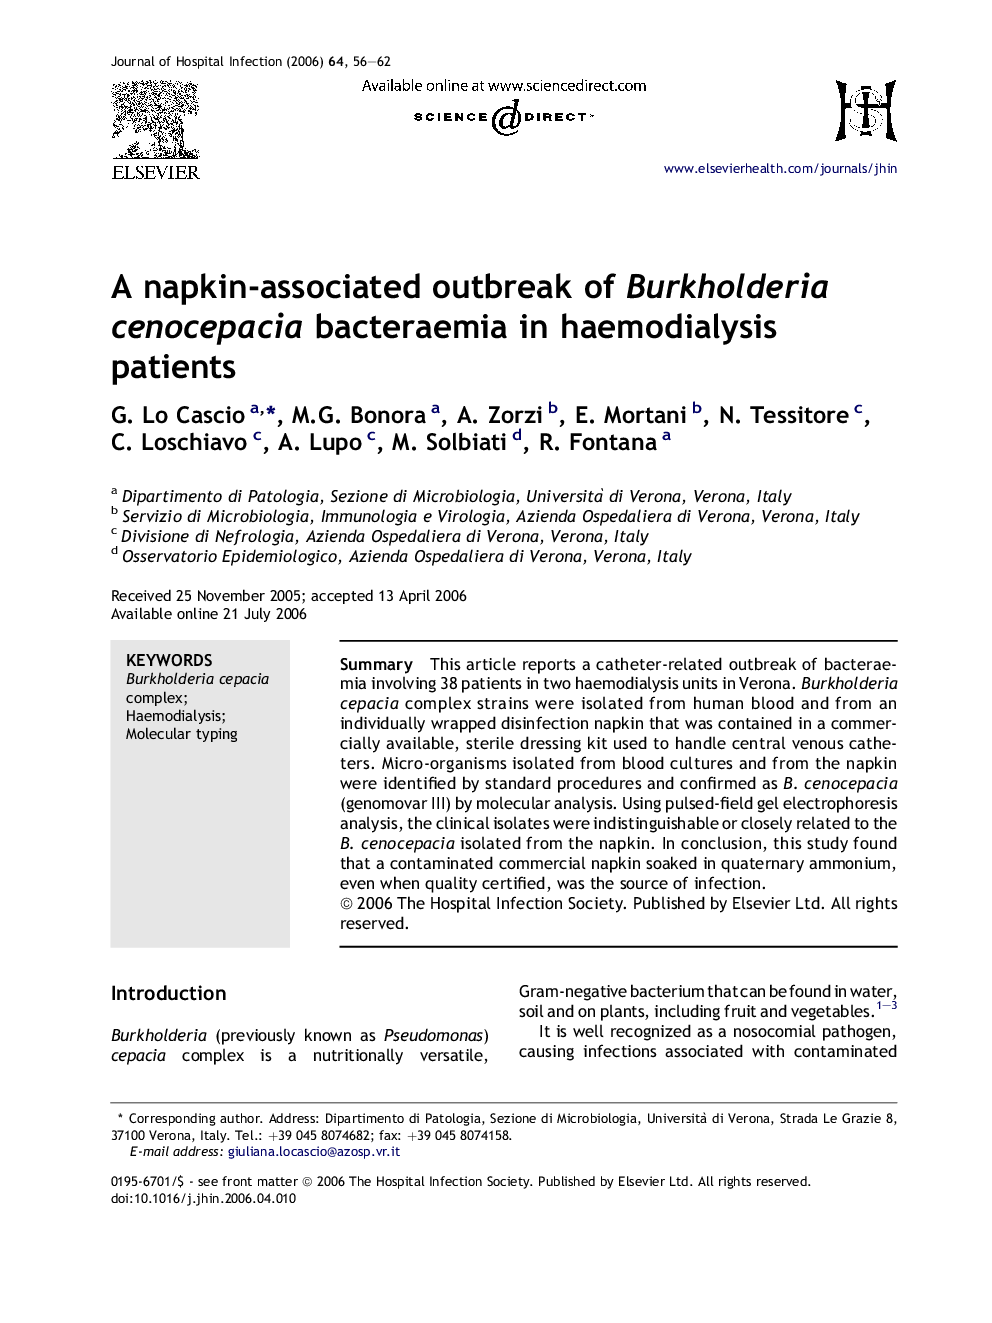 A napkin-associated outbreak of Burkholderia cenocepacia bacteraemia in haemodialysis patients